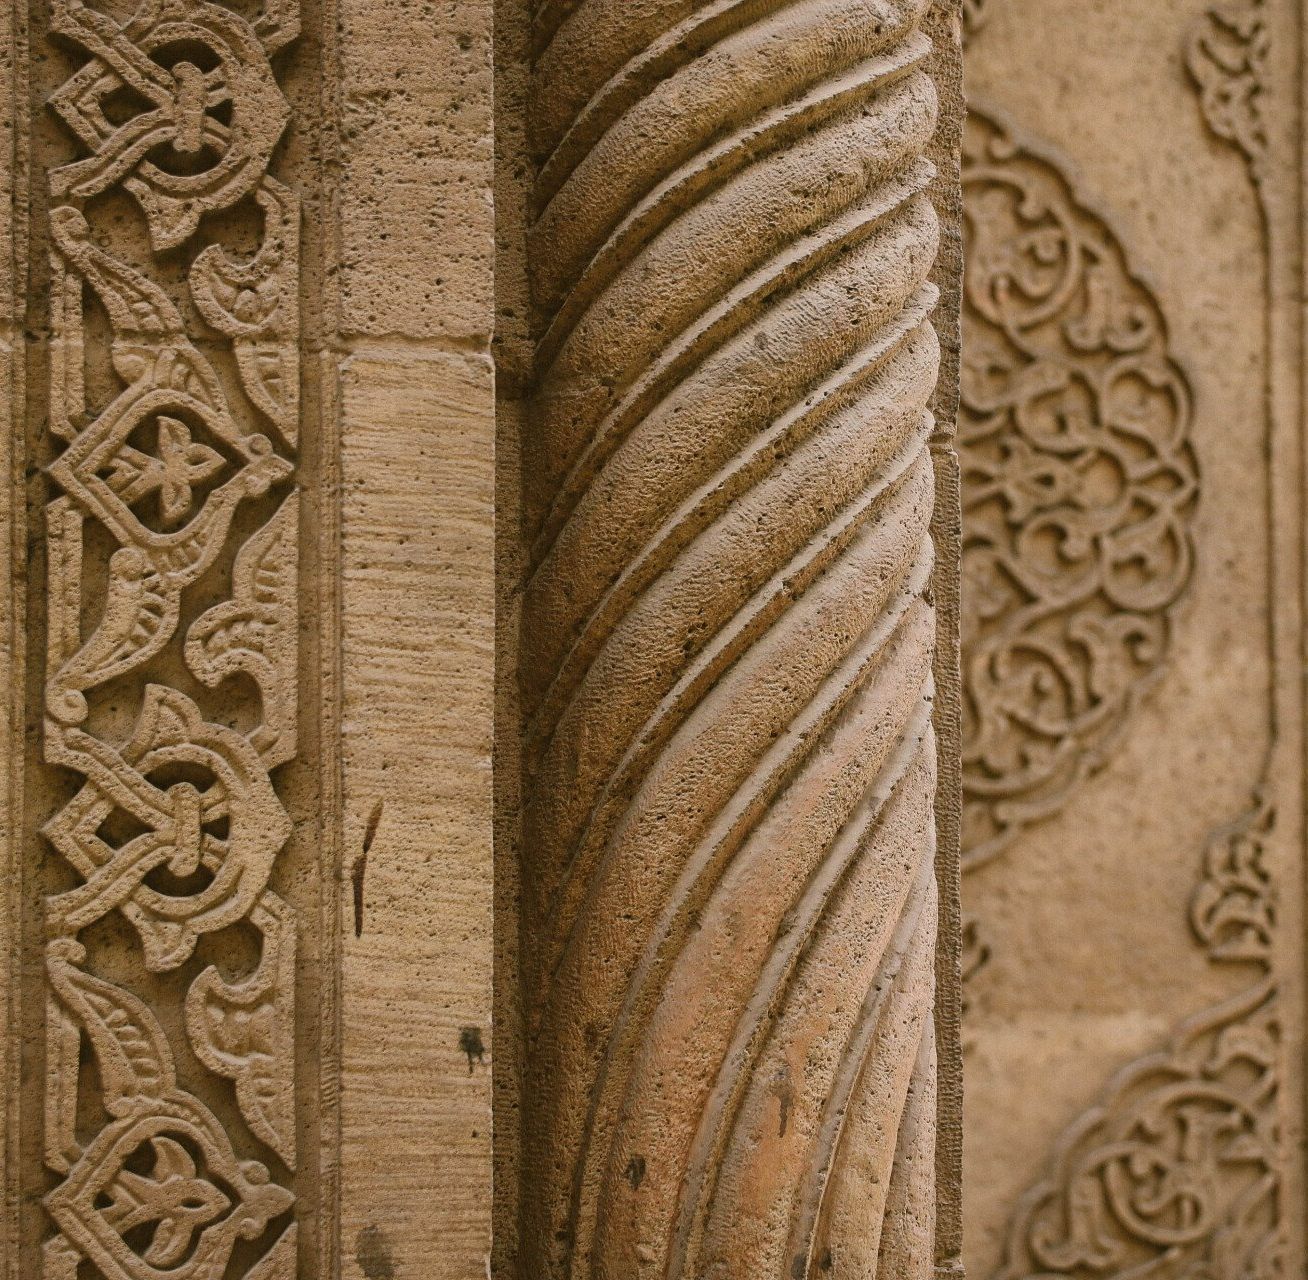 Stone carving pillars